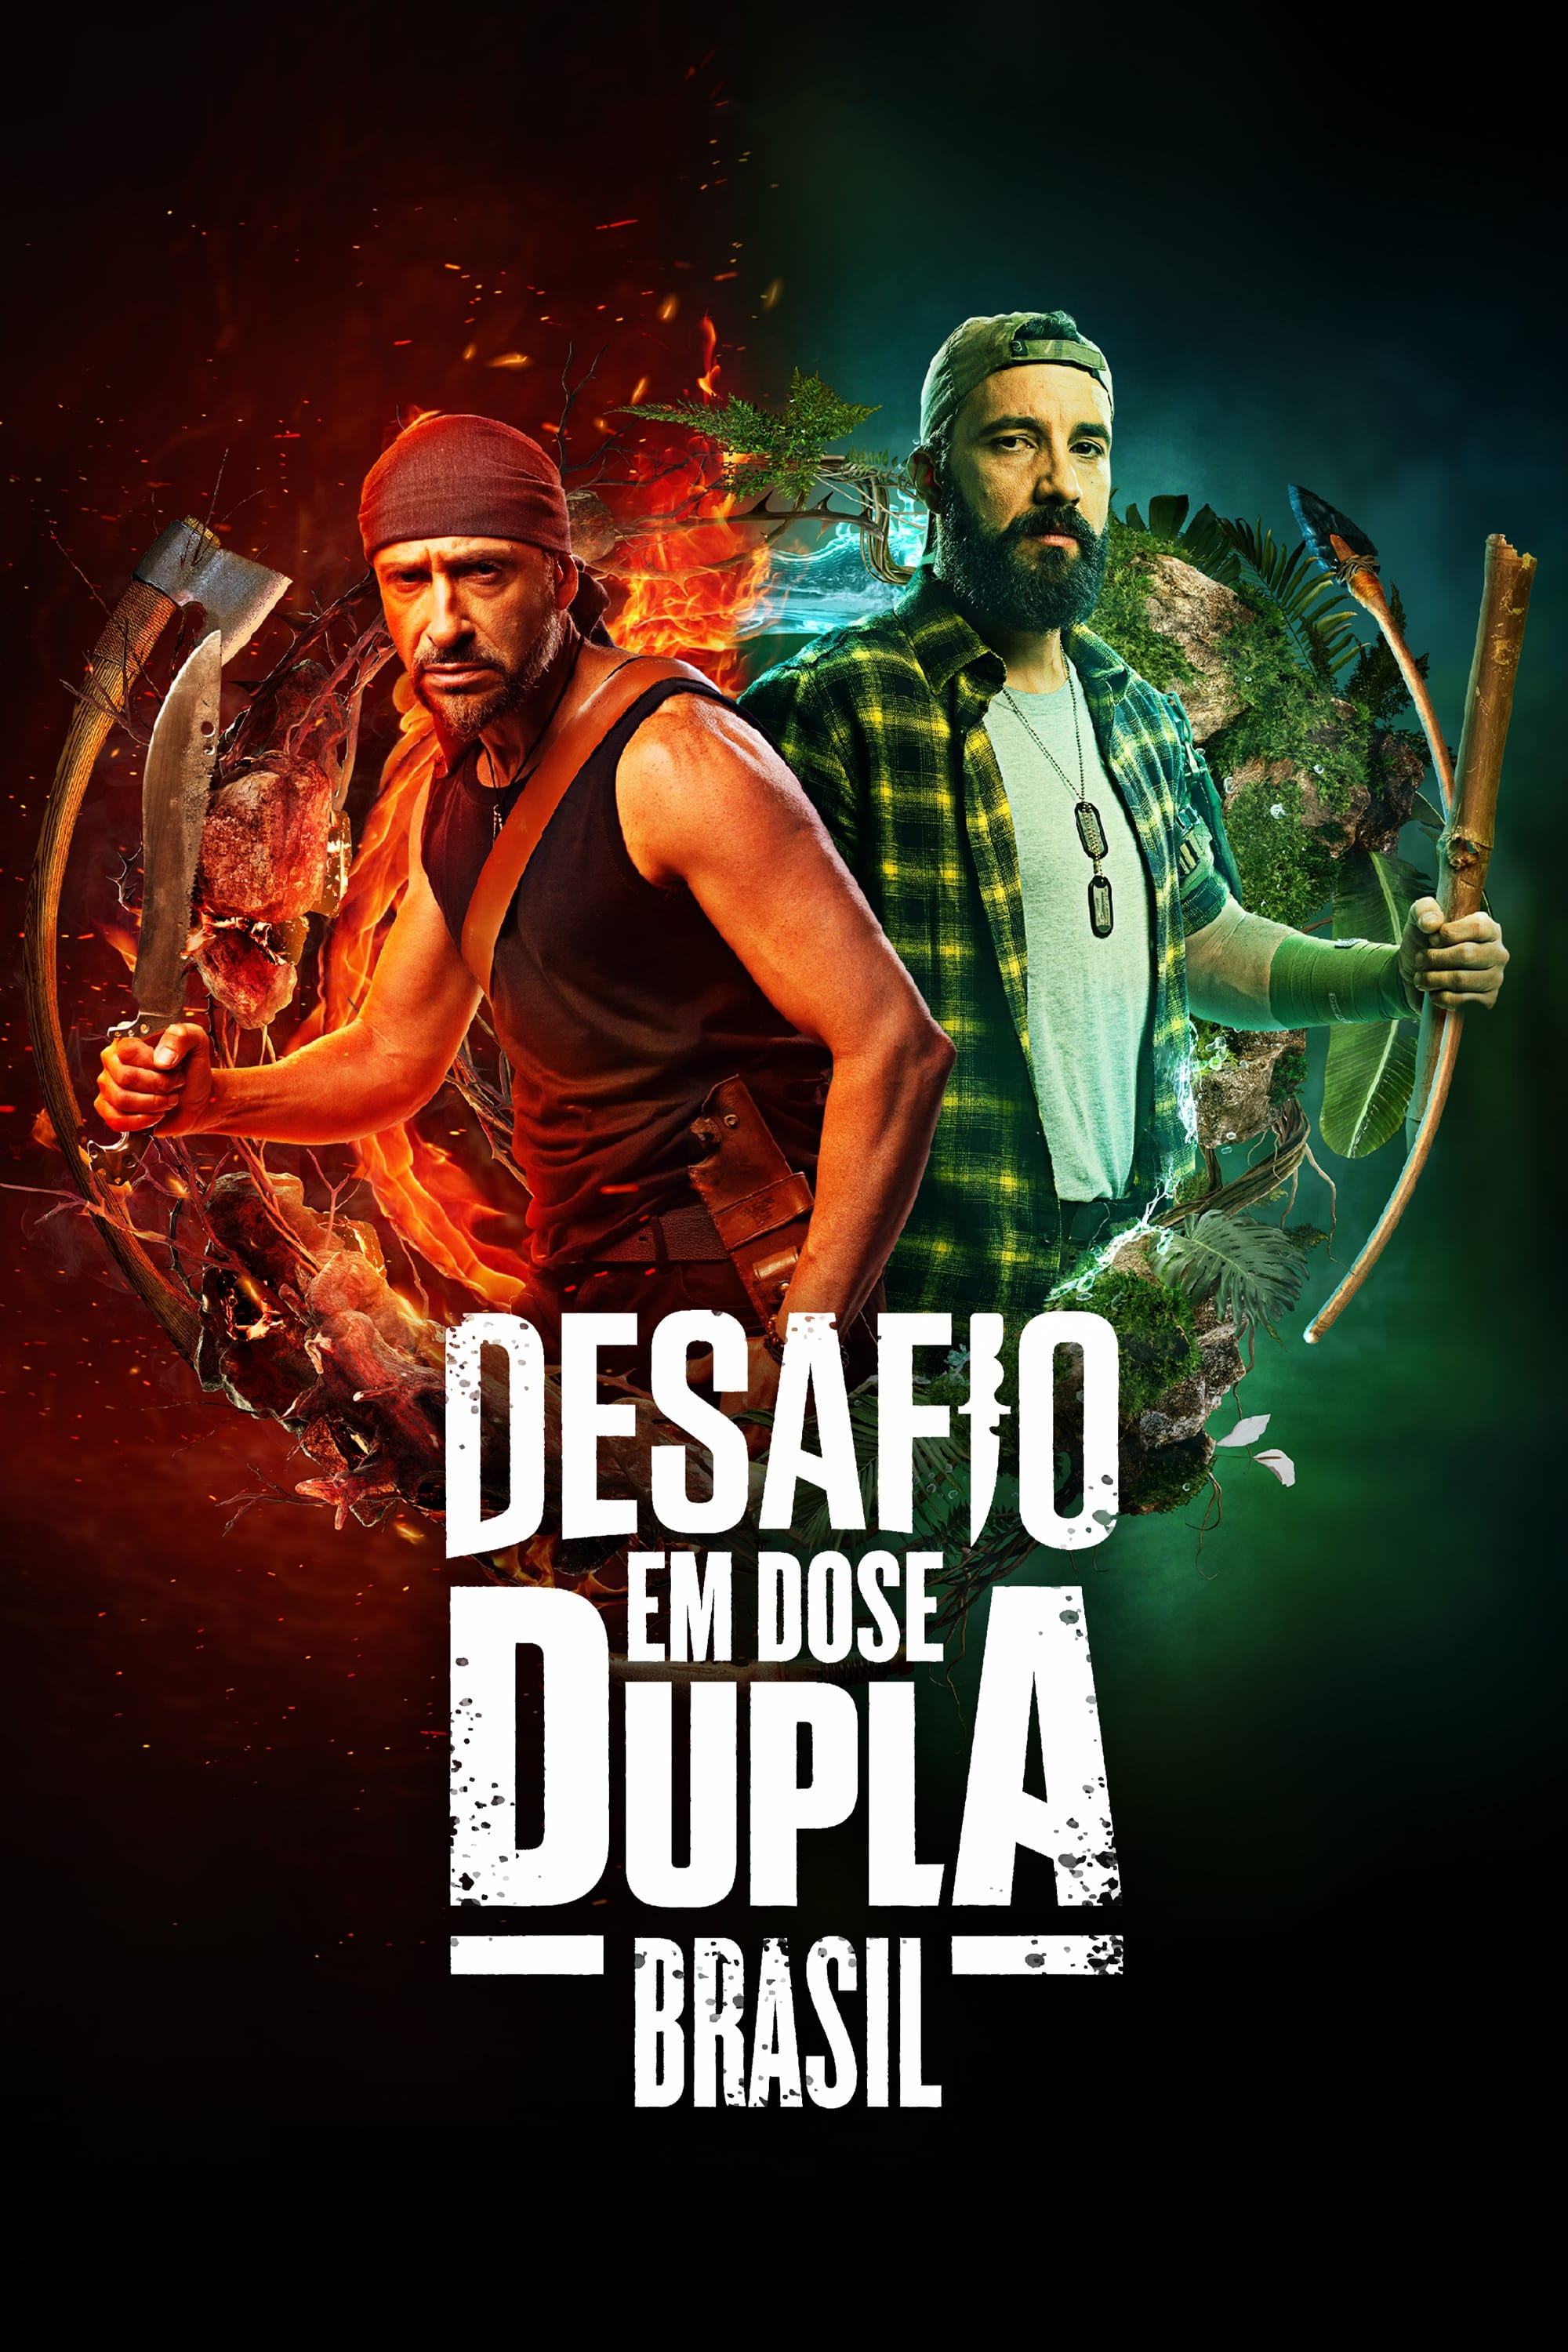 TV ratings for Dual Survival Brazil (Desafio Em Dose Dupla Brasil) in India. Discovery+ TV series